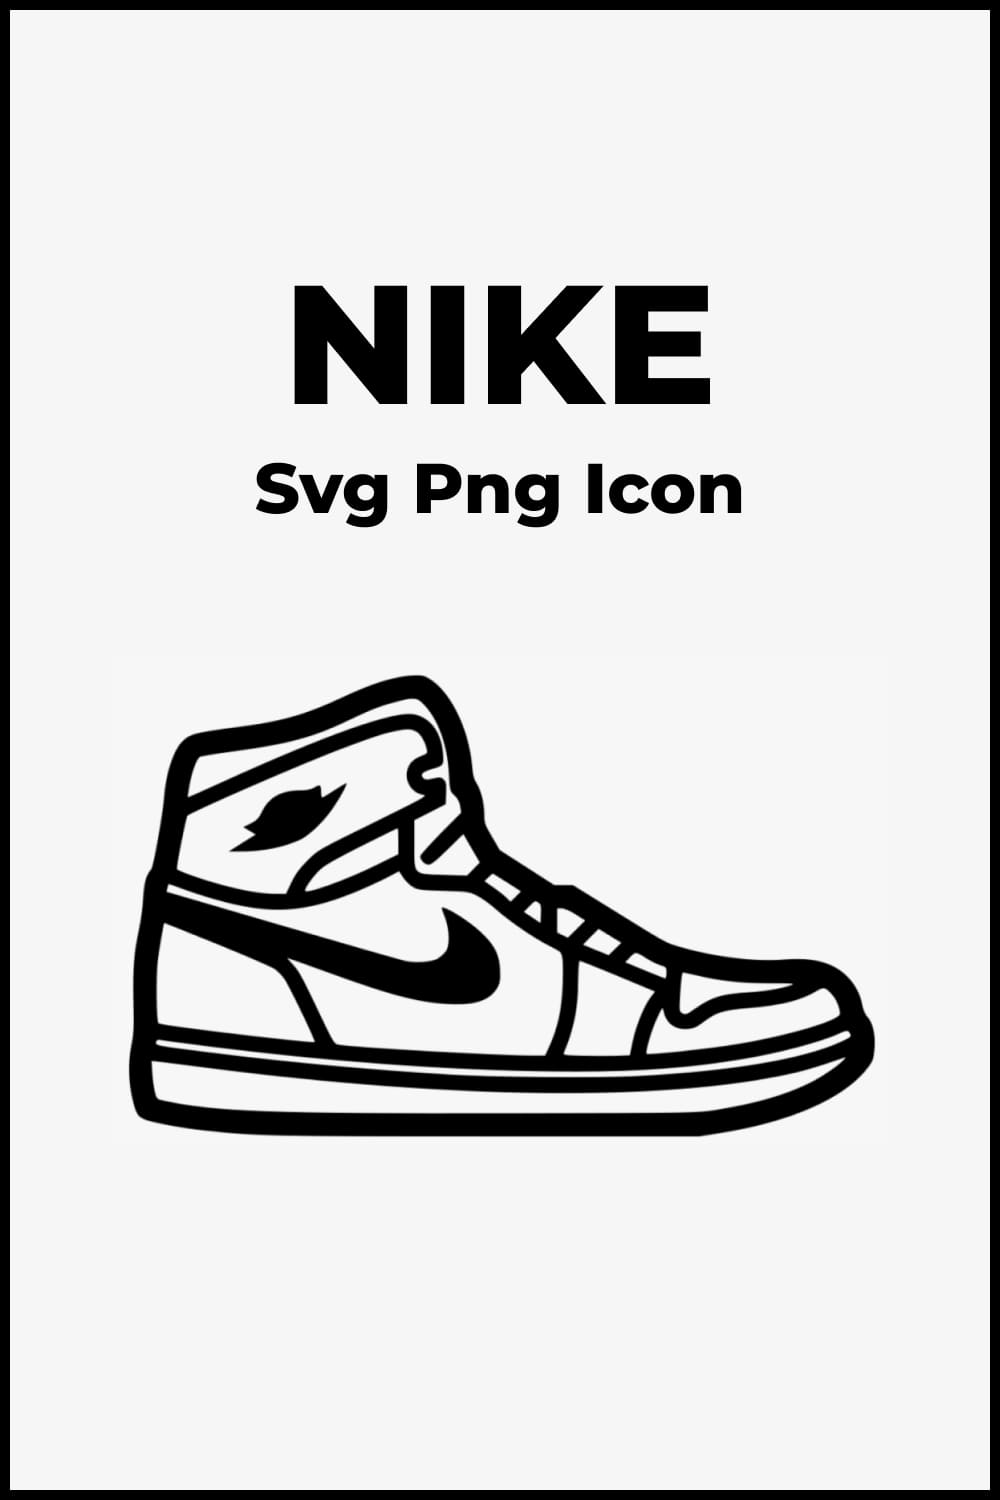 Image of Nike sneakers.